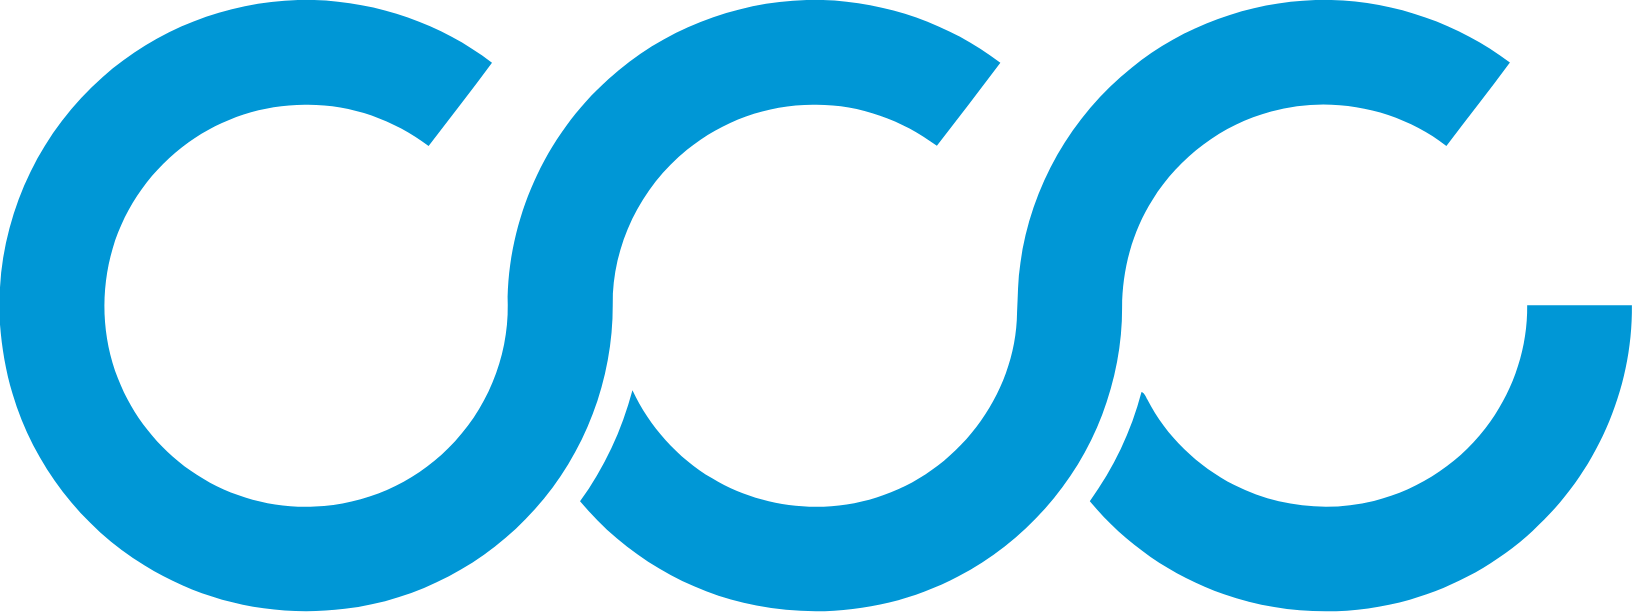 Ccc Logo Letter Design Vector: เวกเตอร์สต็อก (ปลอดค่าลิขสิทธิ์) 2266889451  | Shutterstock